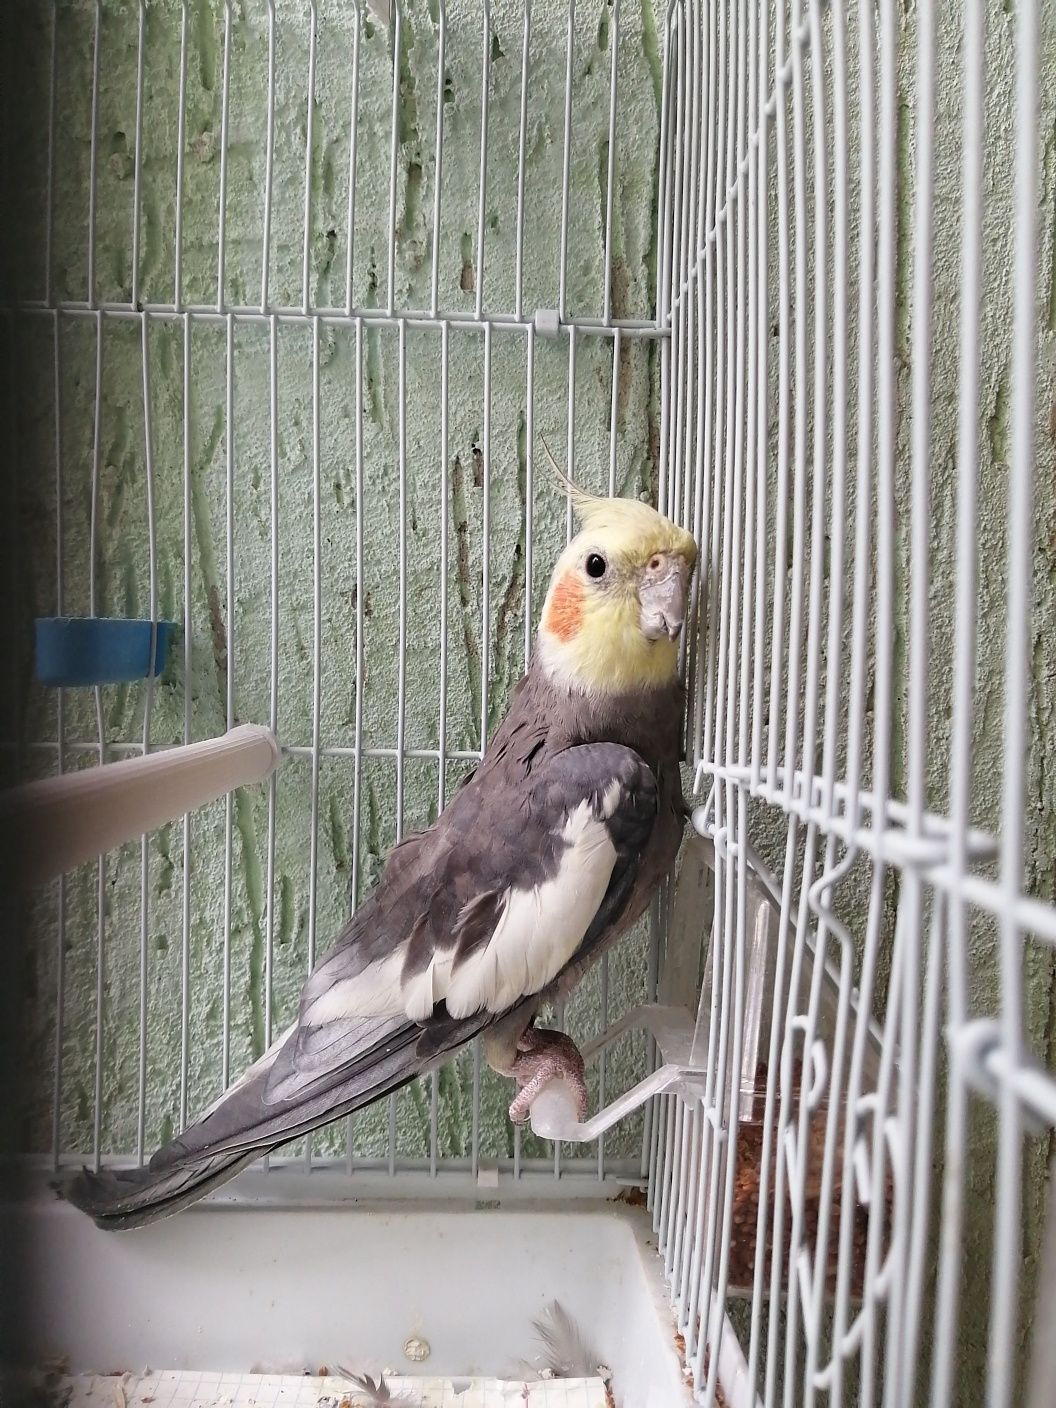 Попугай корелла самец 6-7 месяцев